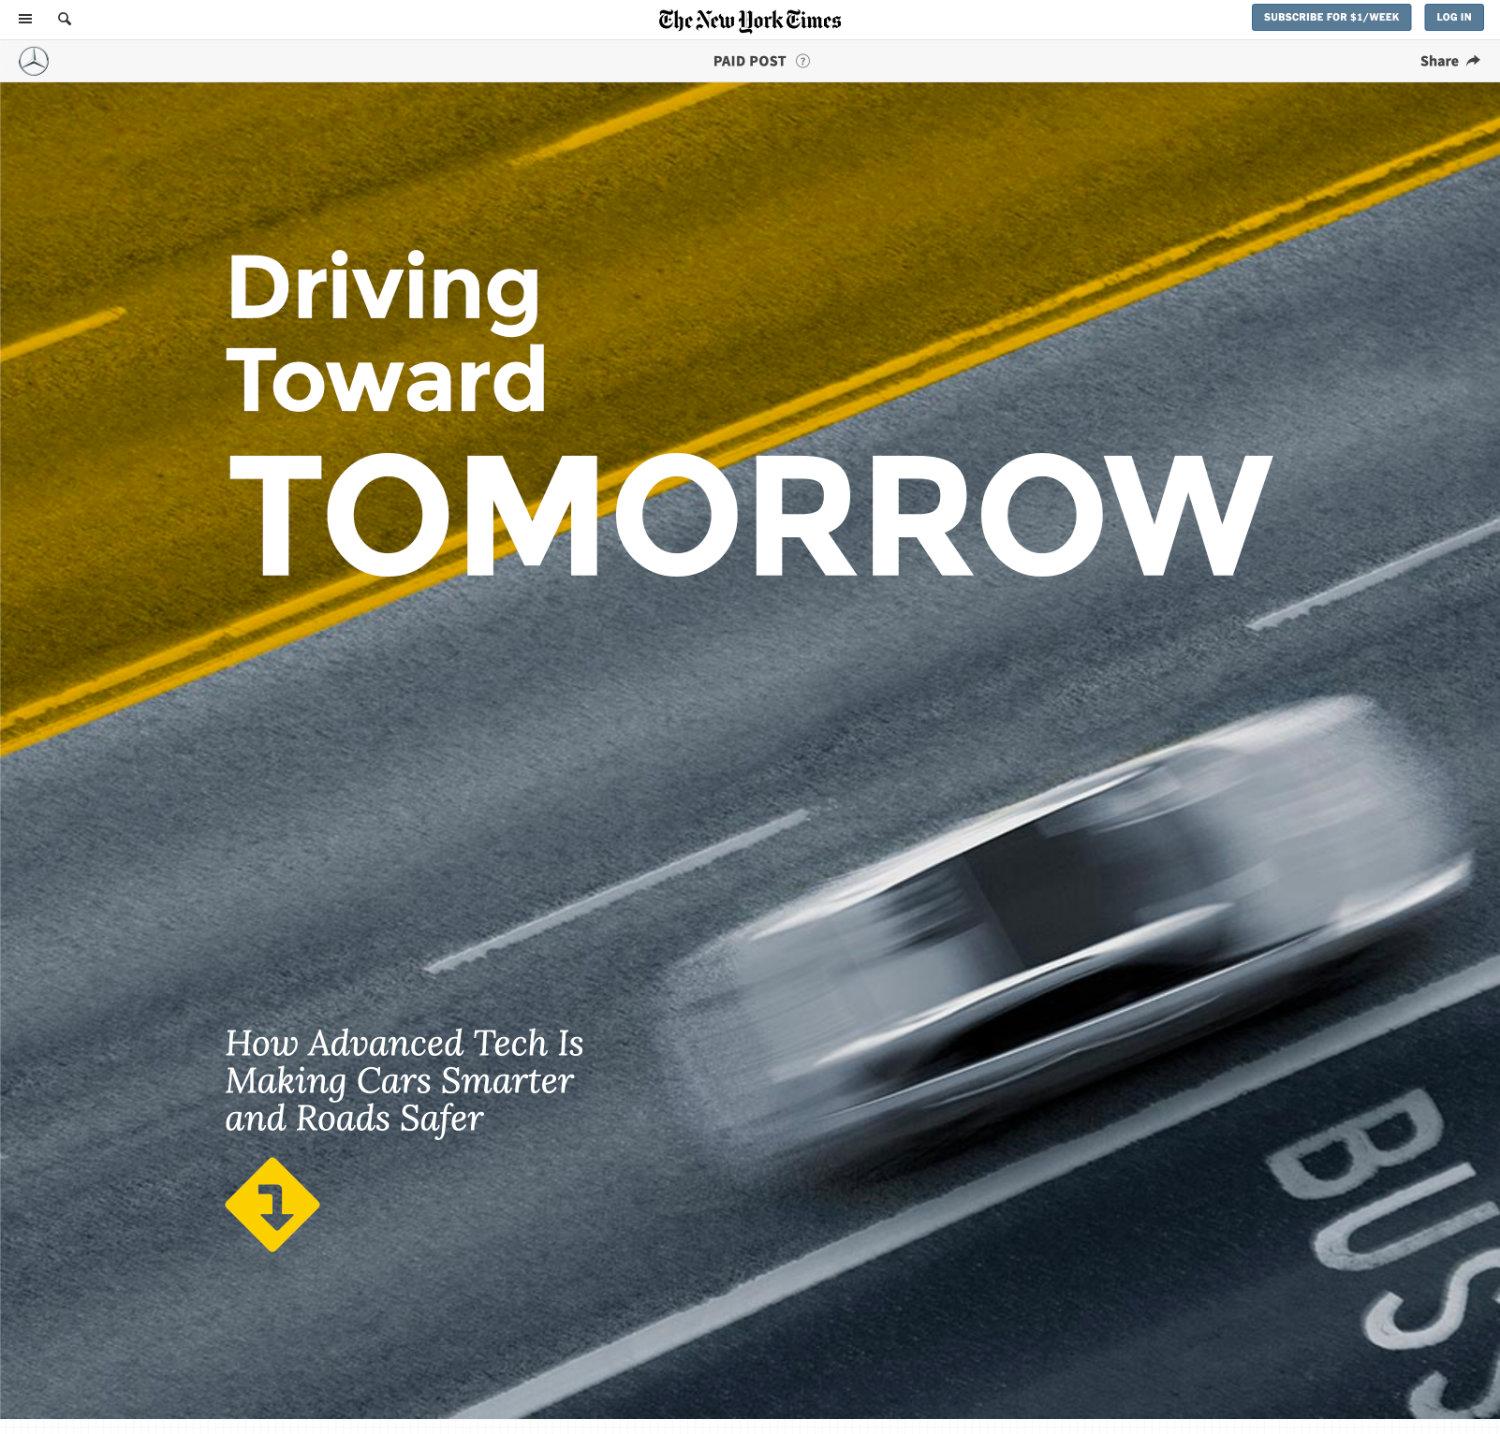 Mercedes-Benz - Driving Toward Tomorrow | NYT